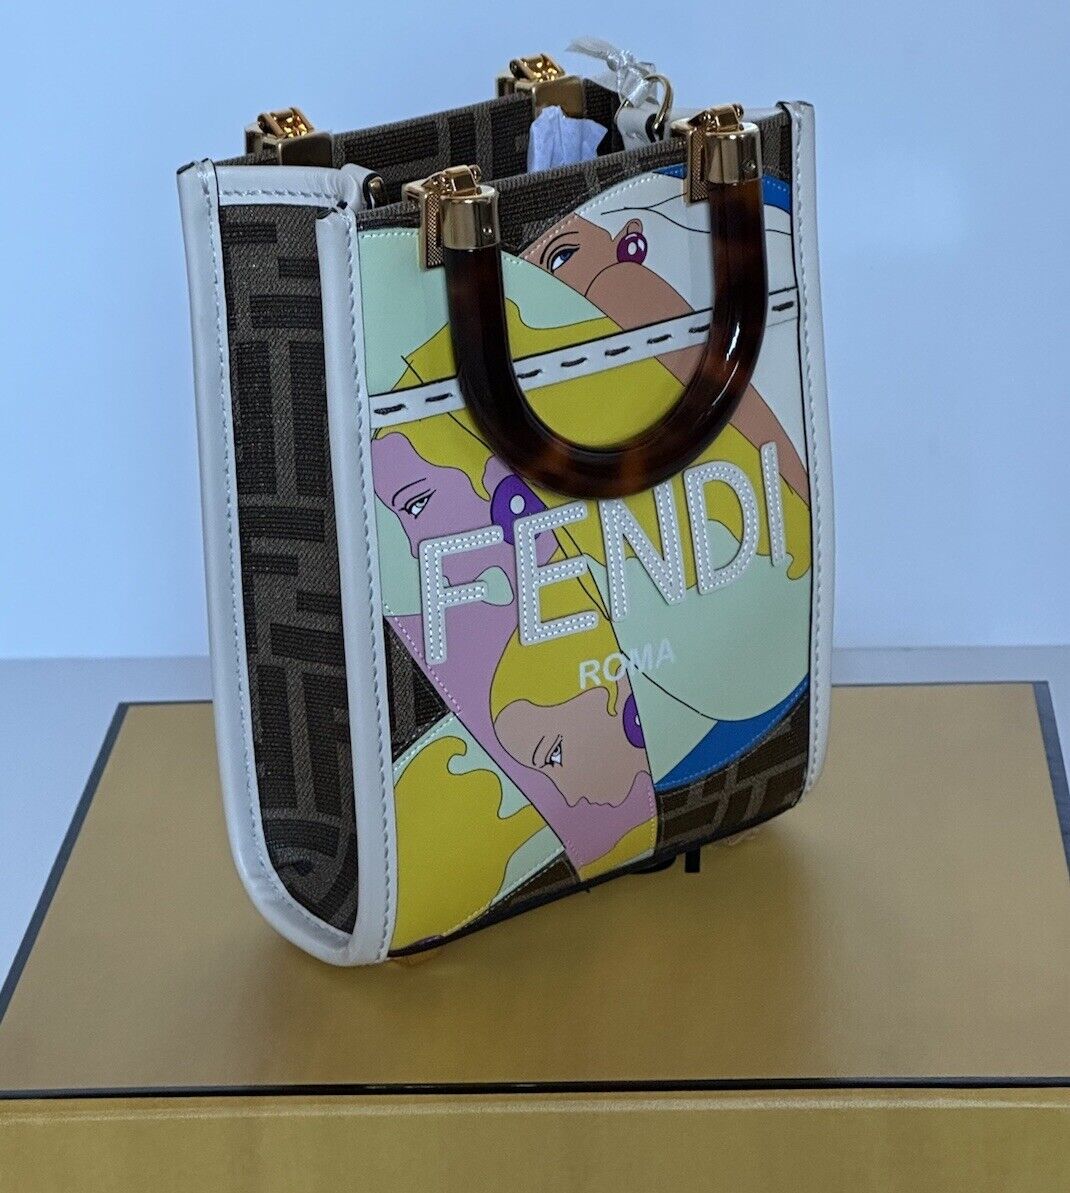 NWT $2772 Fendi Mini Sunshine Shopper Canvas/Leather Brown Shoulder Bag 8BS051